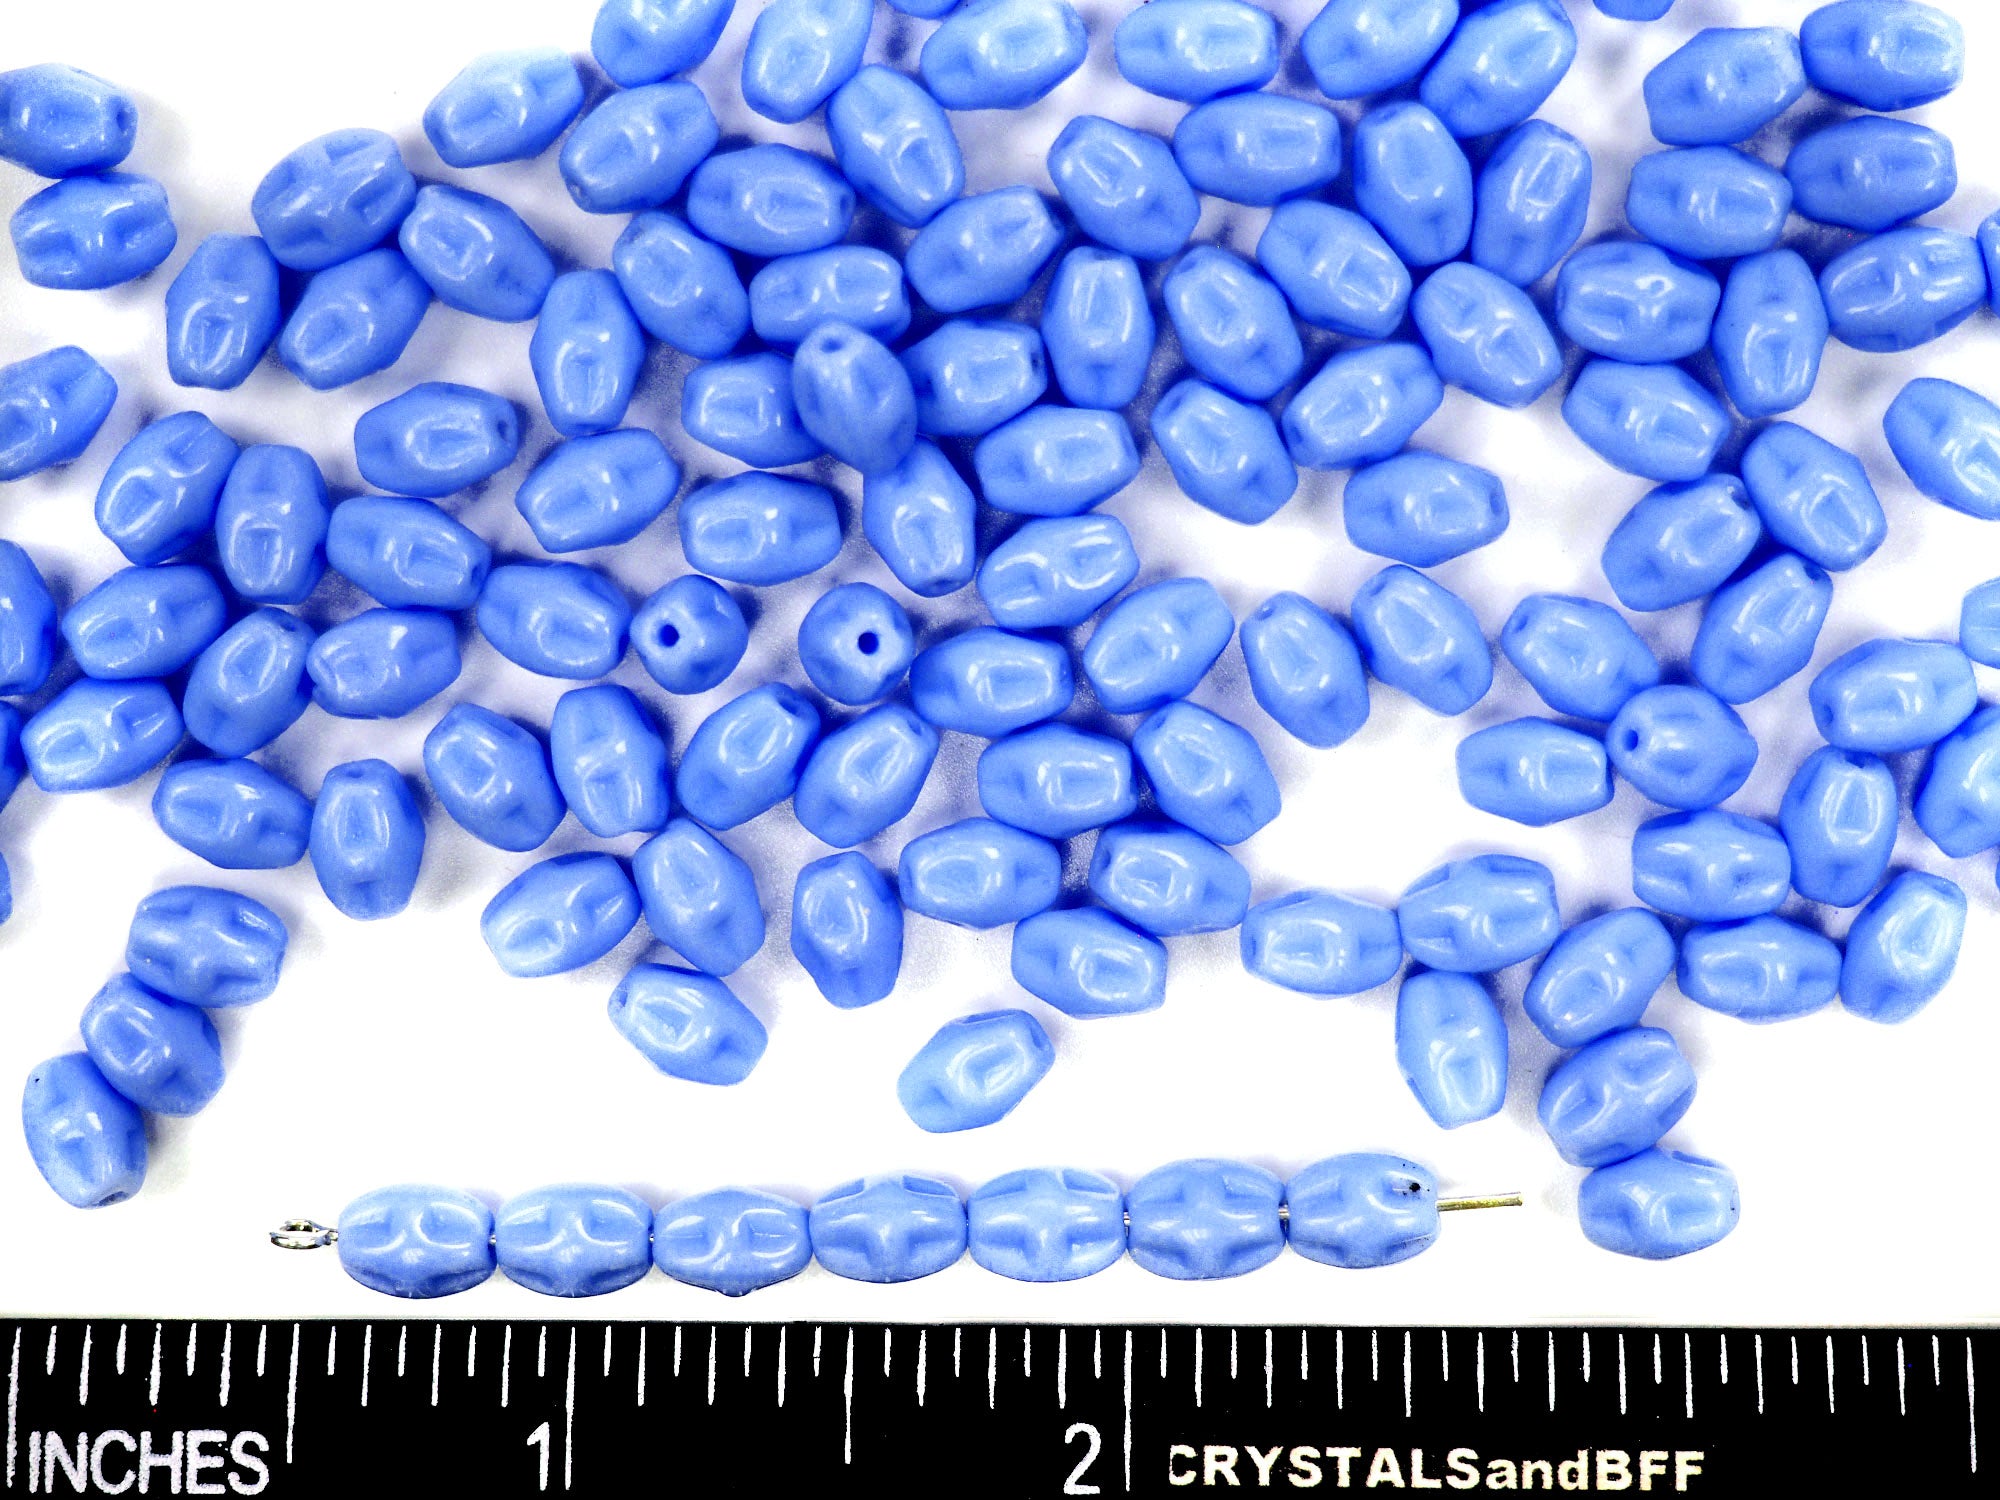 Czech Glass Druk Cross Beads in size 7x5mm, Blue Opaque color, 50pcs, P905